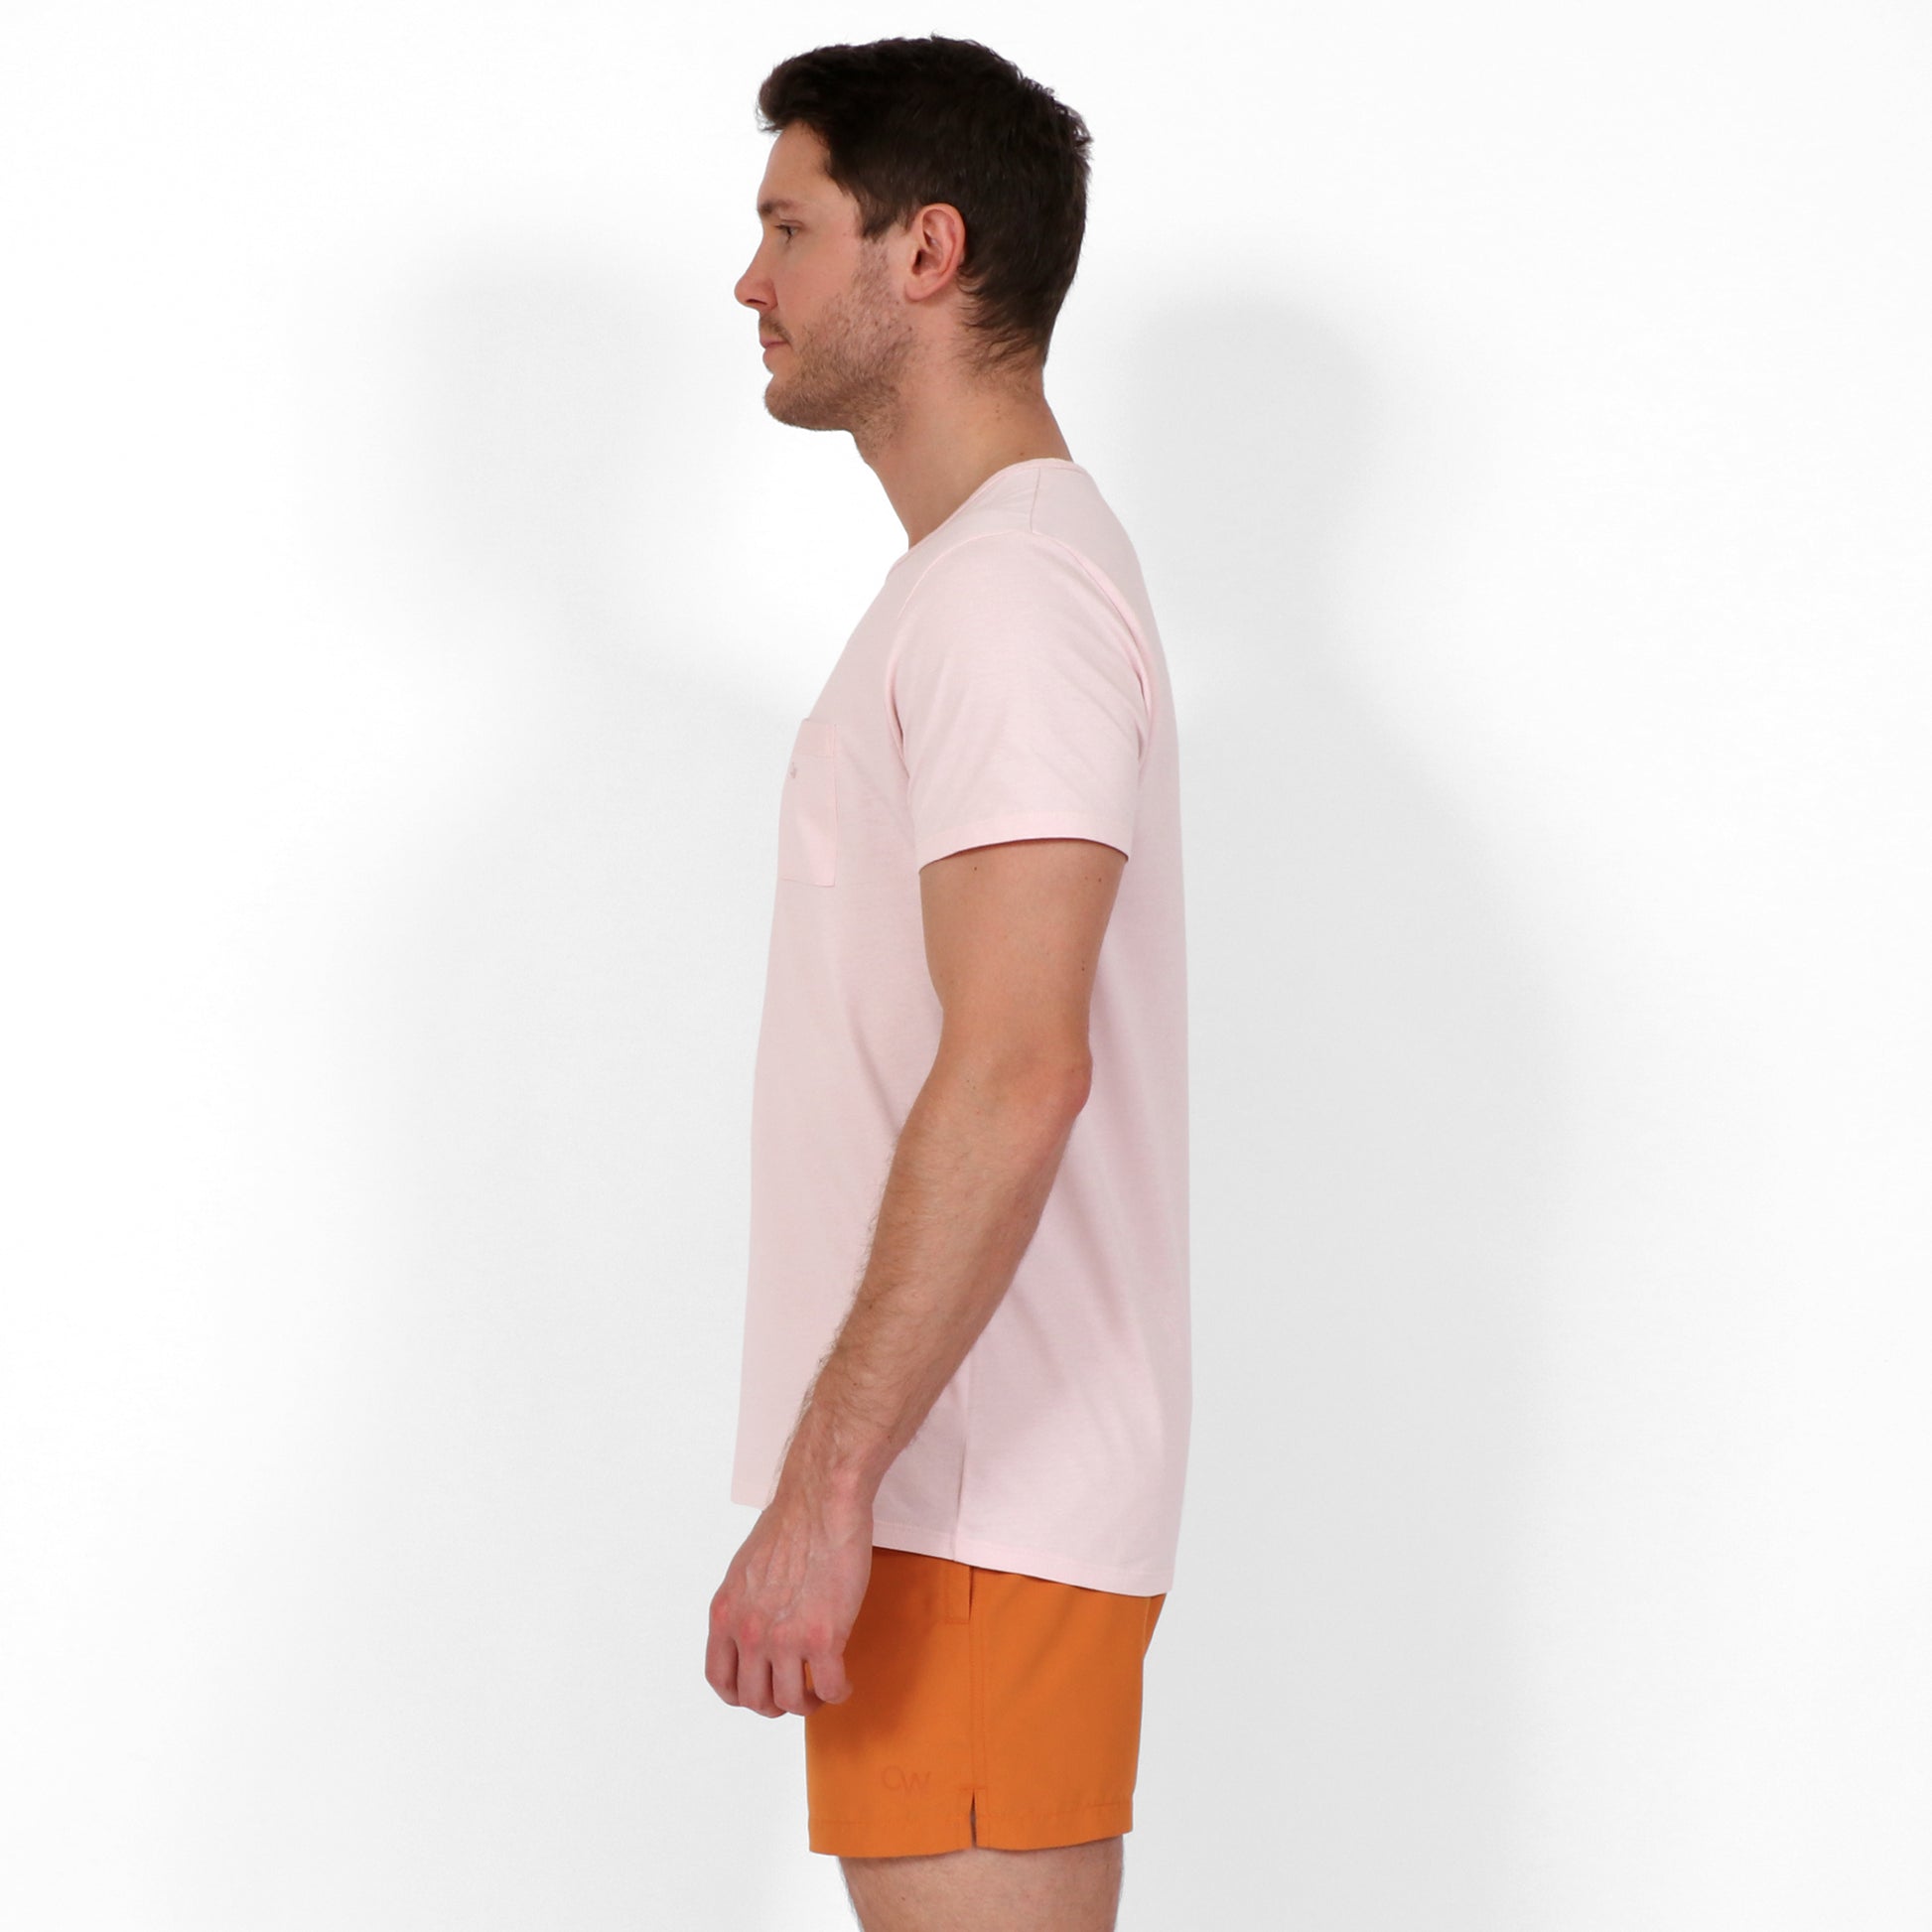 Original Weekend Organic Cotton Men's Pocket T-Shirt in Dawn Pink on Body Side View